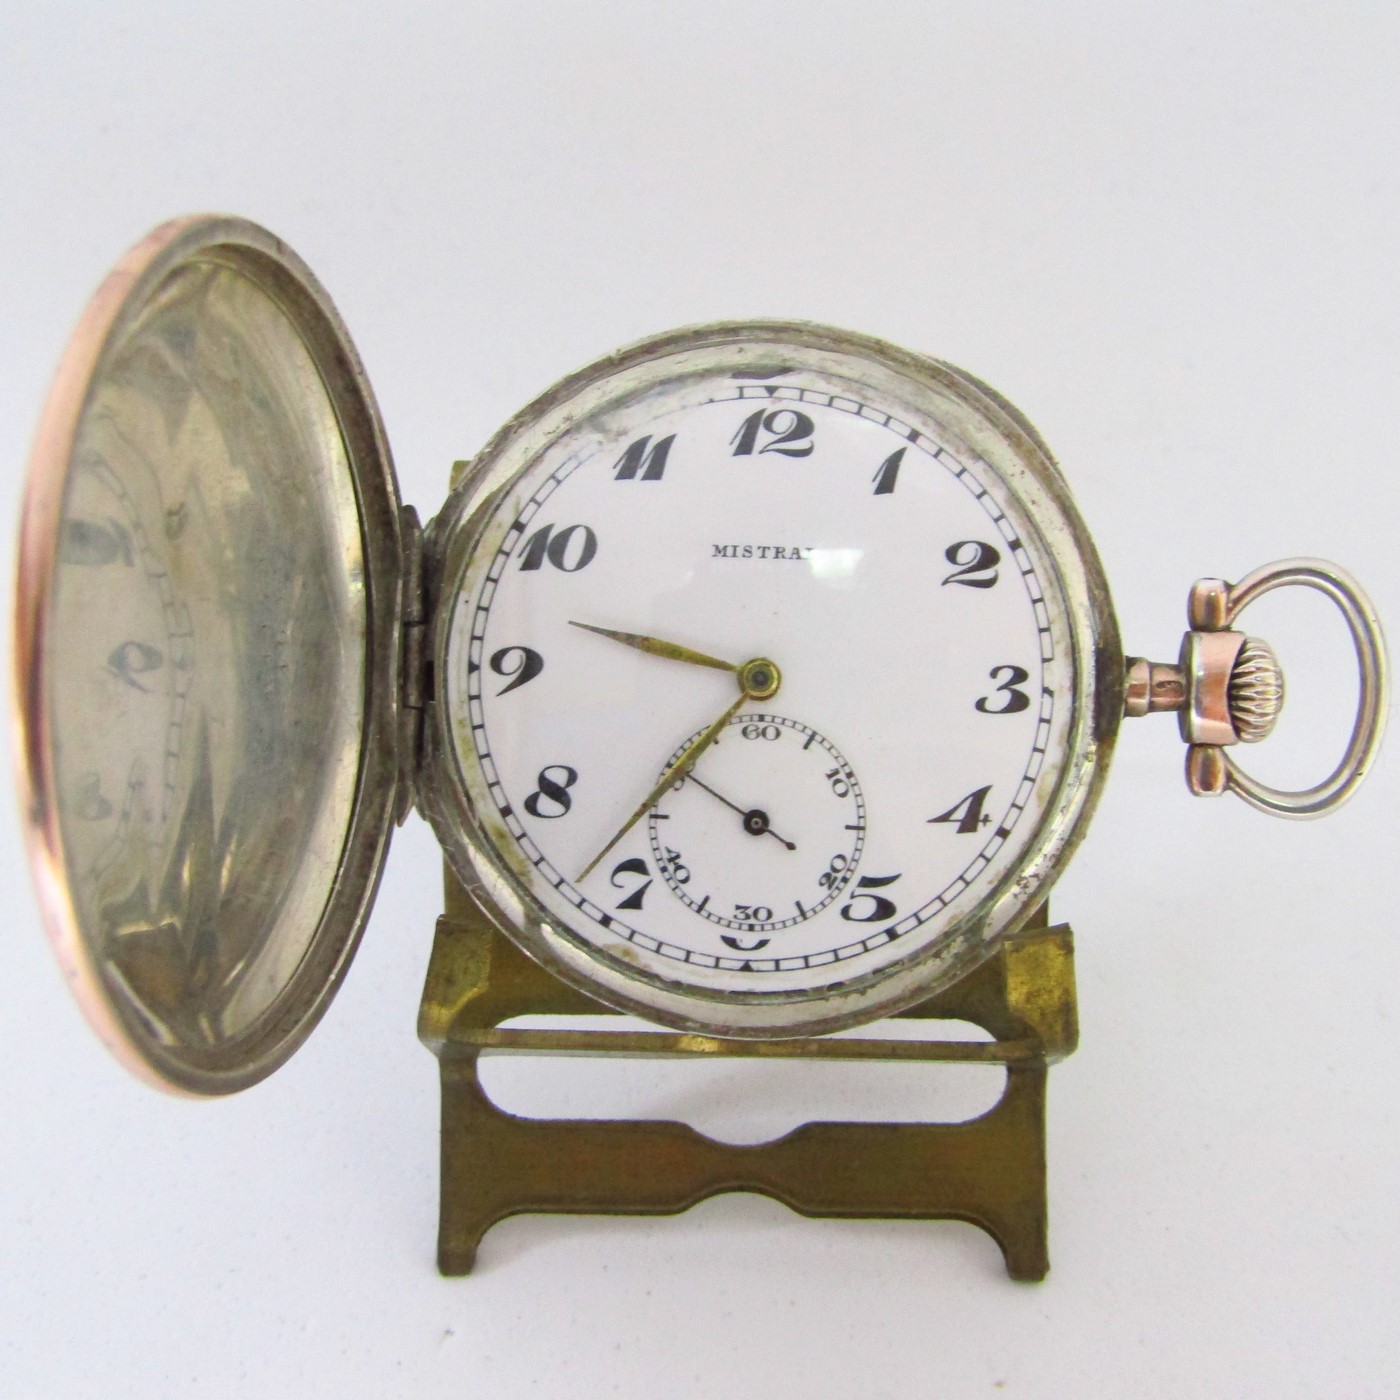 MOVADO - MISTRAL. Pocket watch, saboneta and remontoir. Silver. Switzerland, ca. 1920.